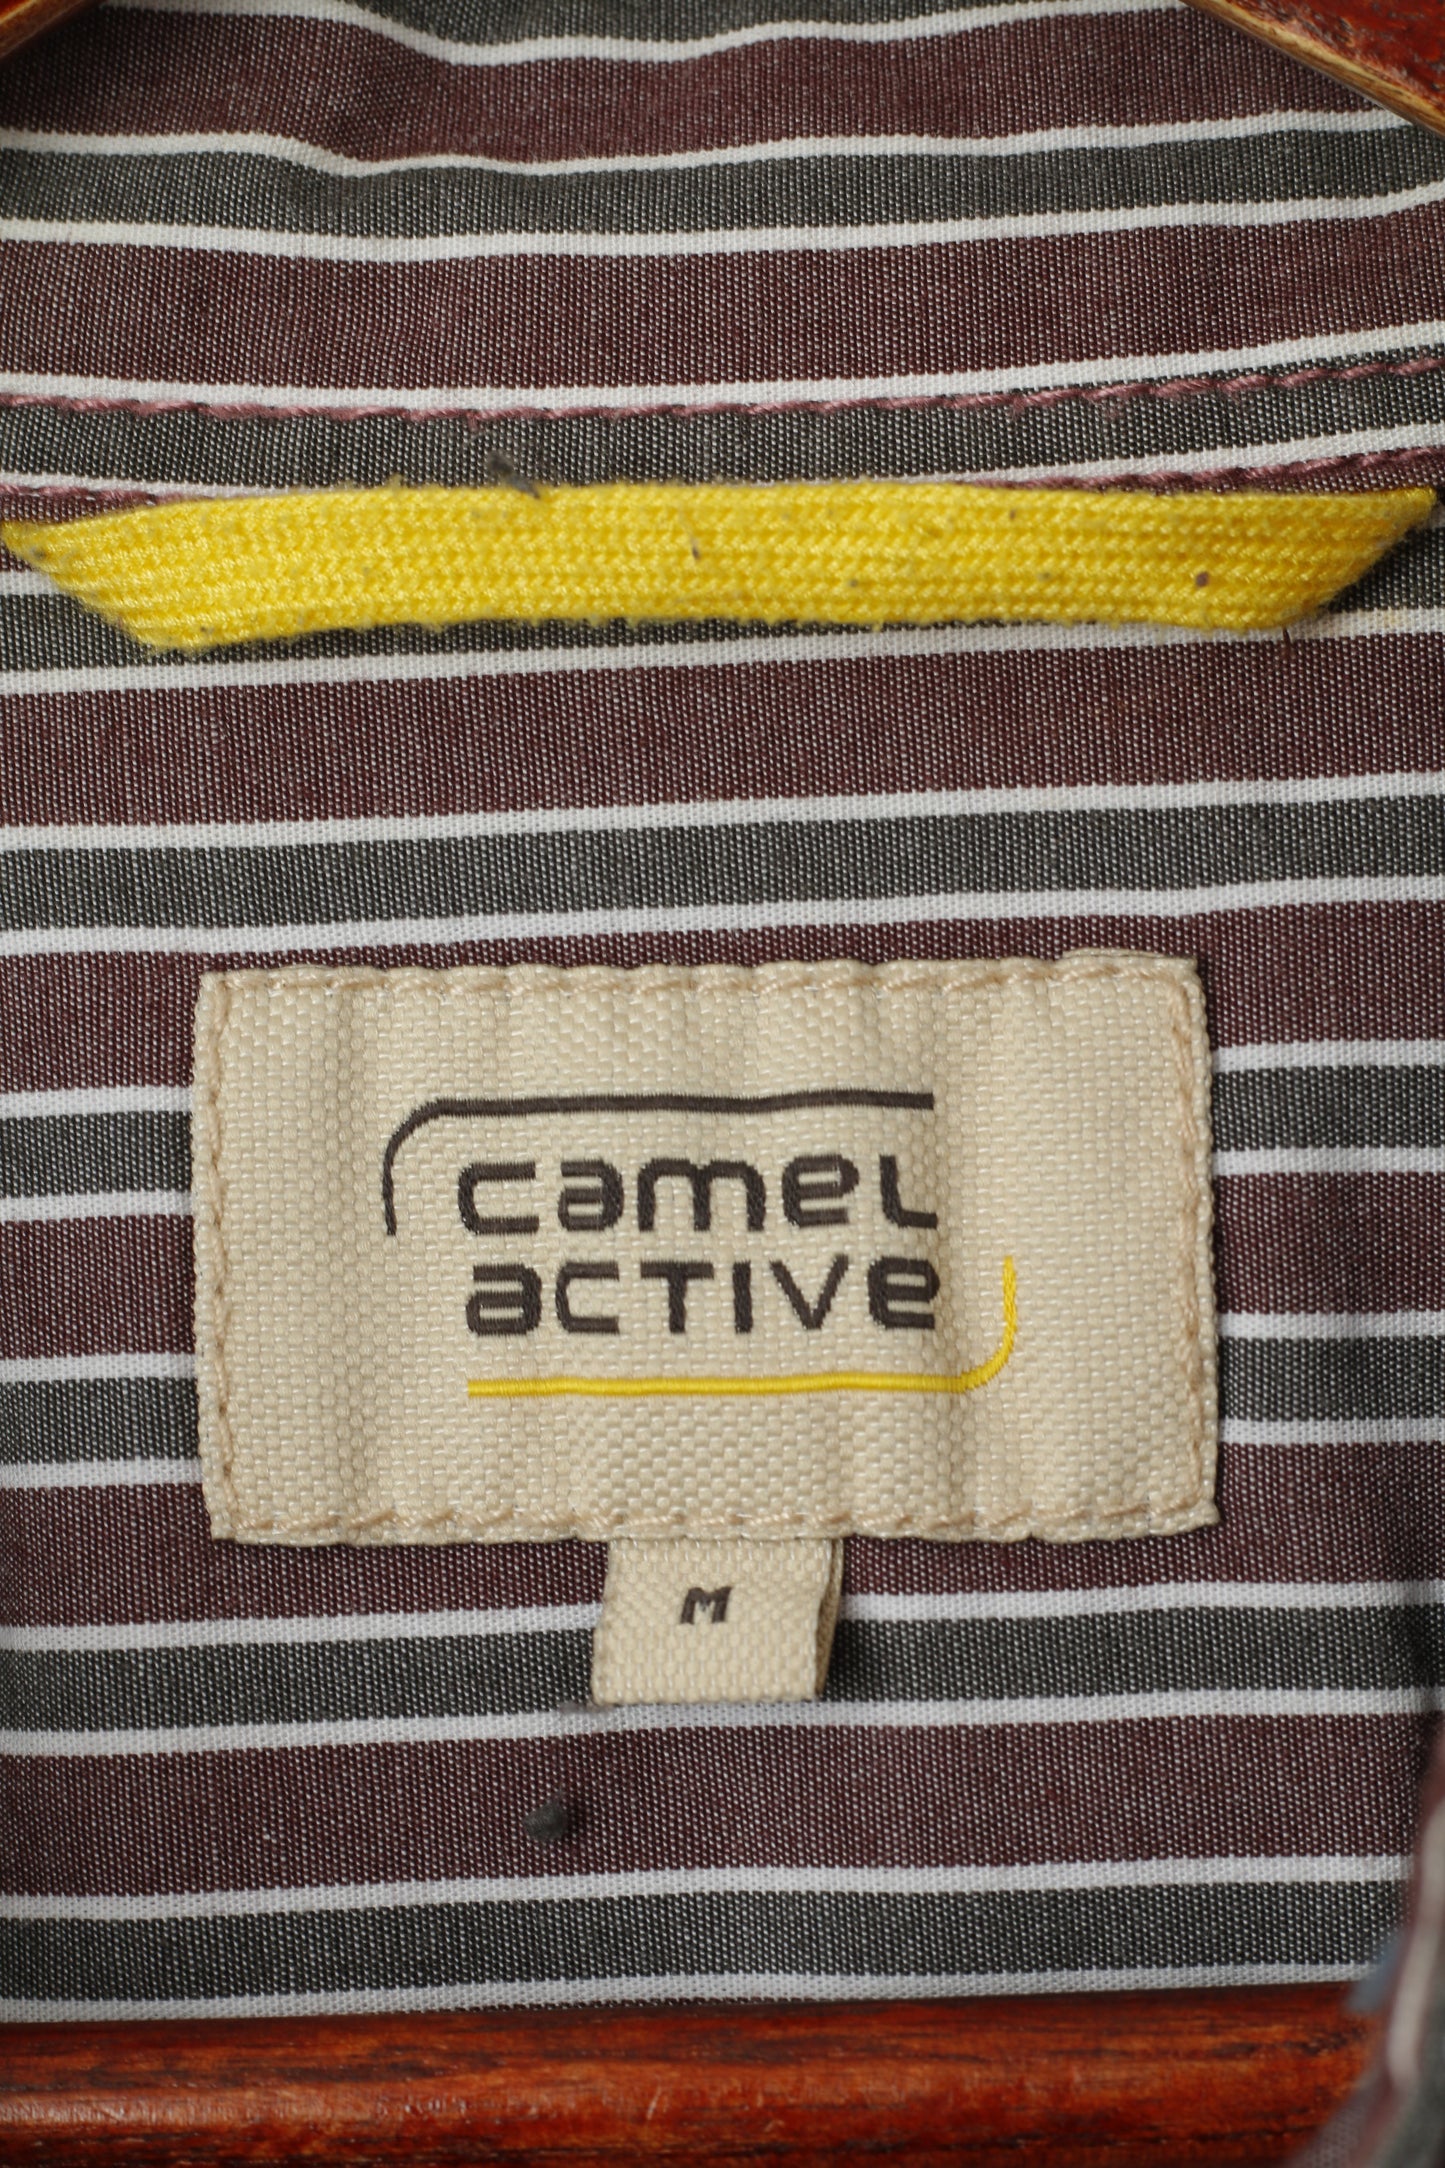 Camel Active Men M Casual Shirt Brown Grey Striped Cotton Long Sleeve Top